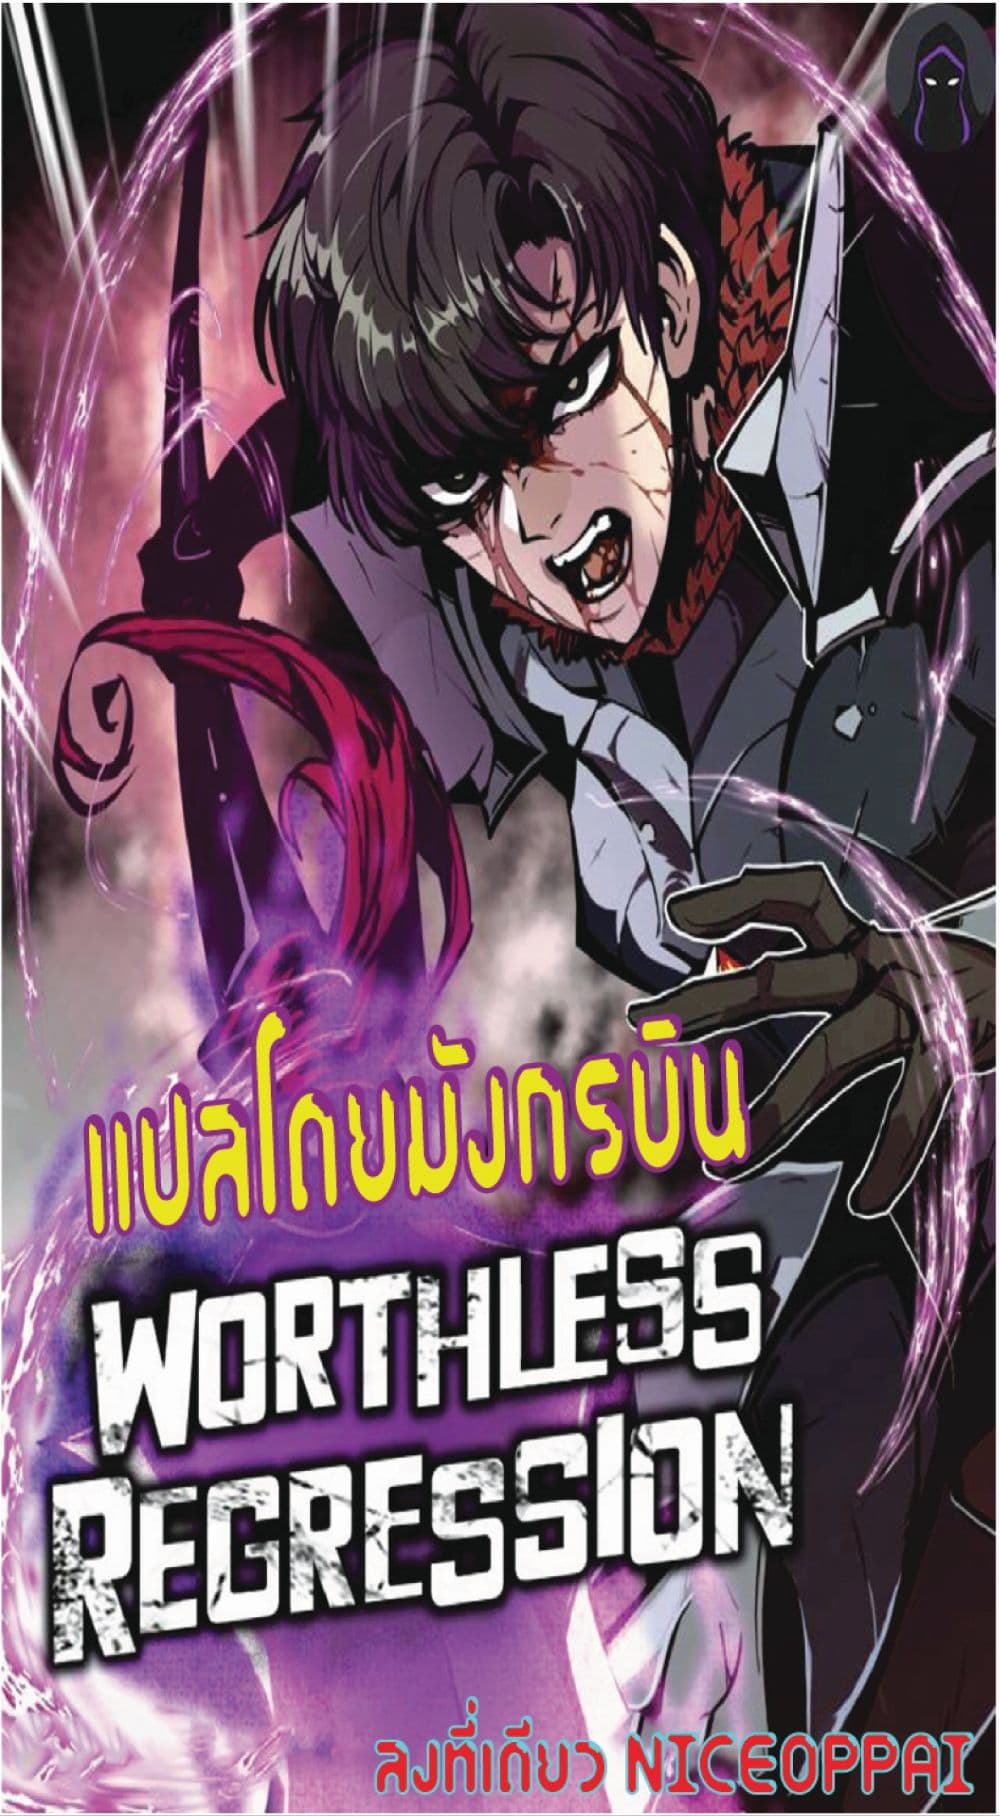 Worthless Regression12 01